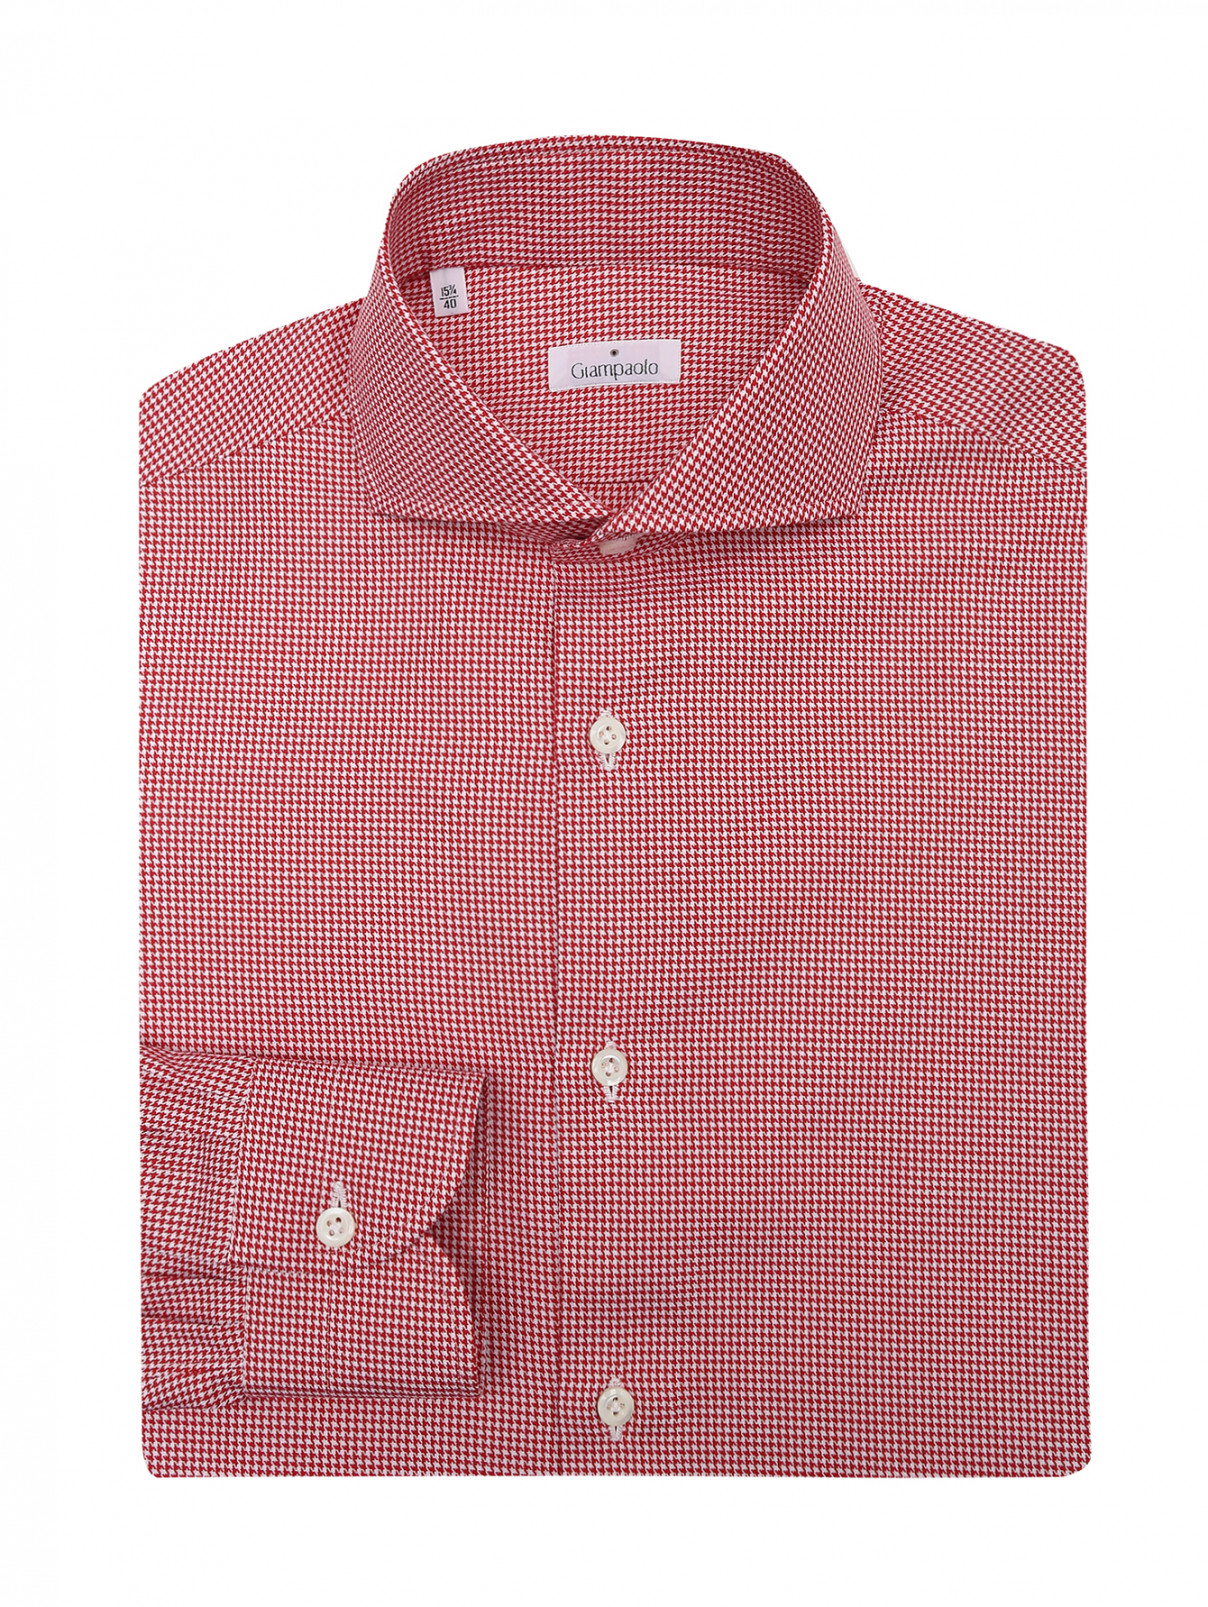 Рубашка из хлопка с узором Giampaolo  –  Общий вид  – Цвет:  Узор